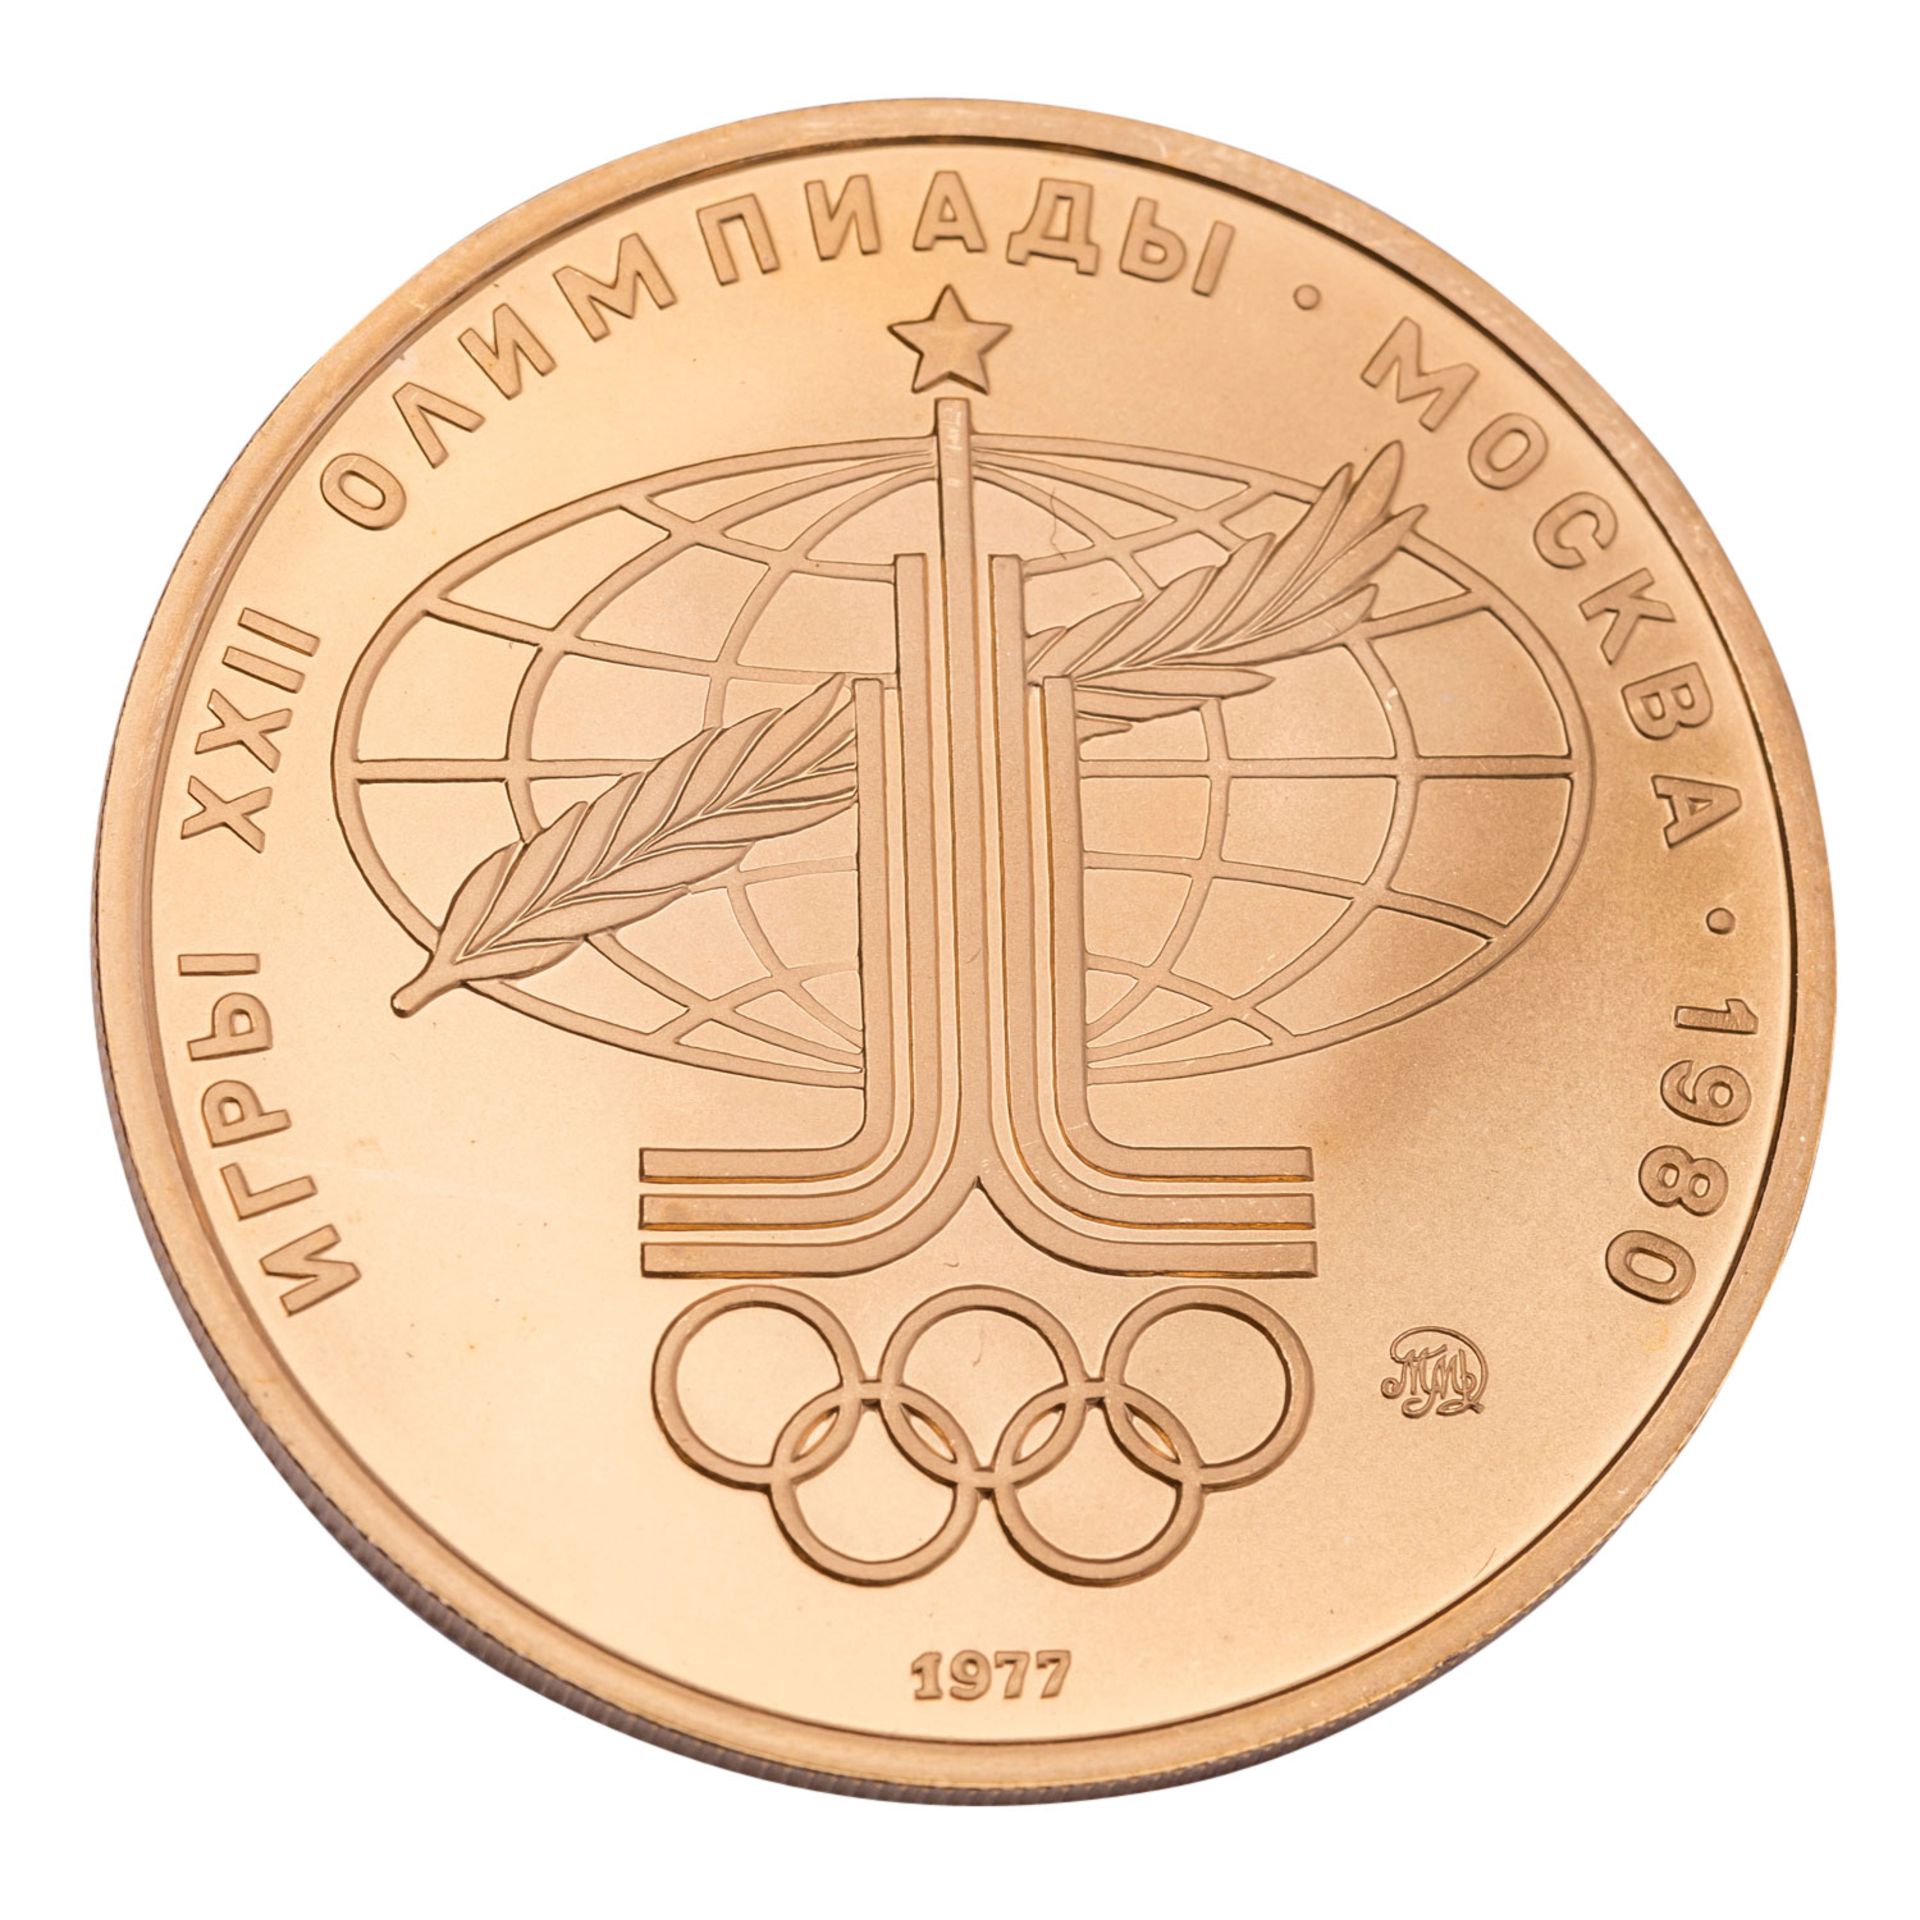 UdSSR/Gold - 100 Rubel 1977, Olympische Spiele Moskau 1980, - Image 2 of 2